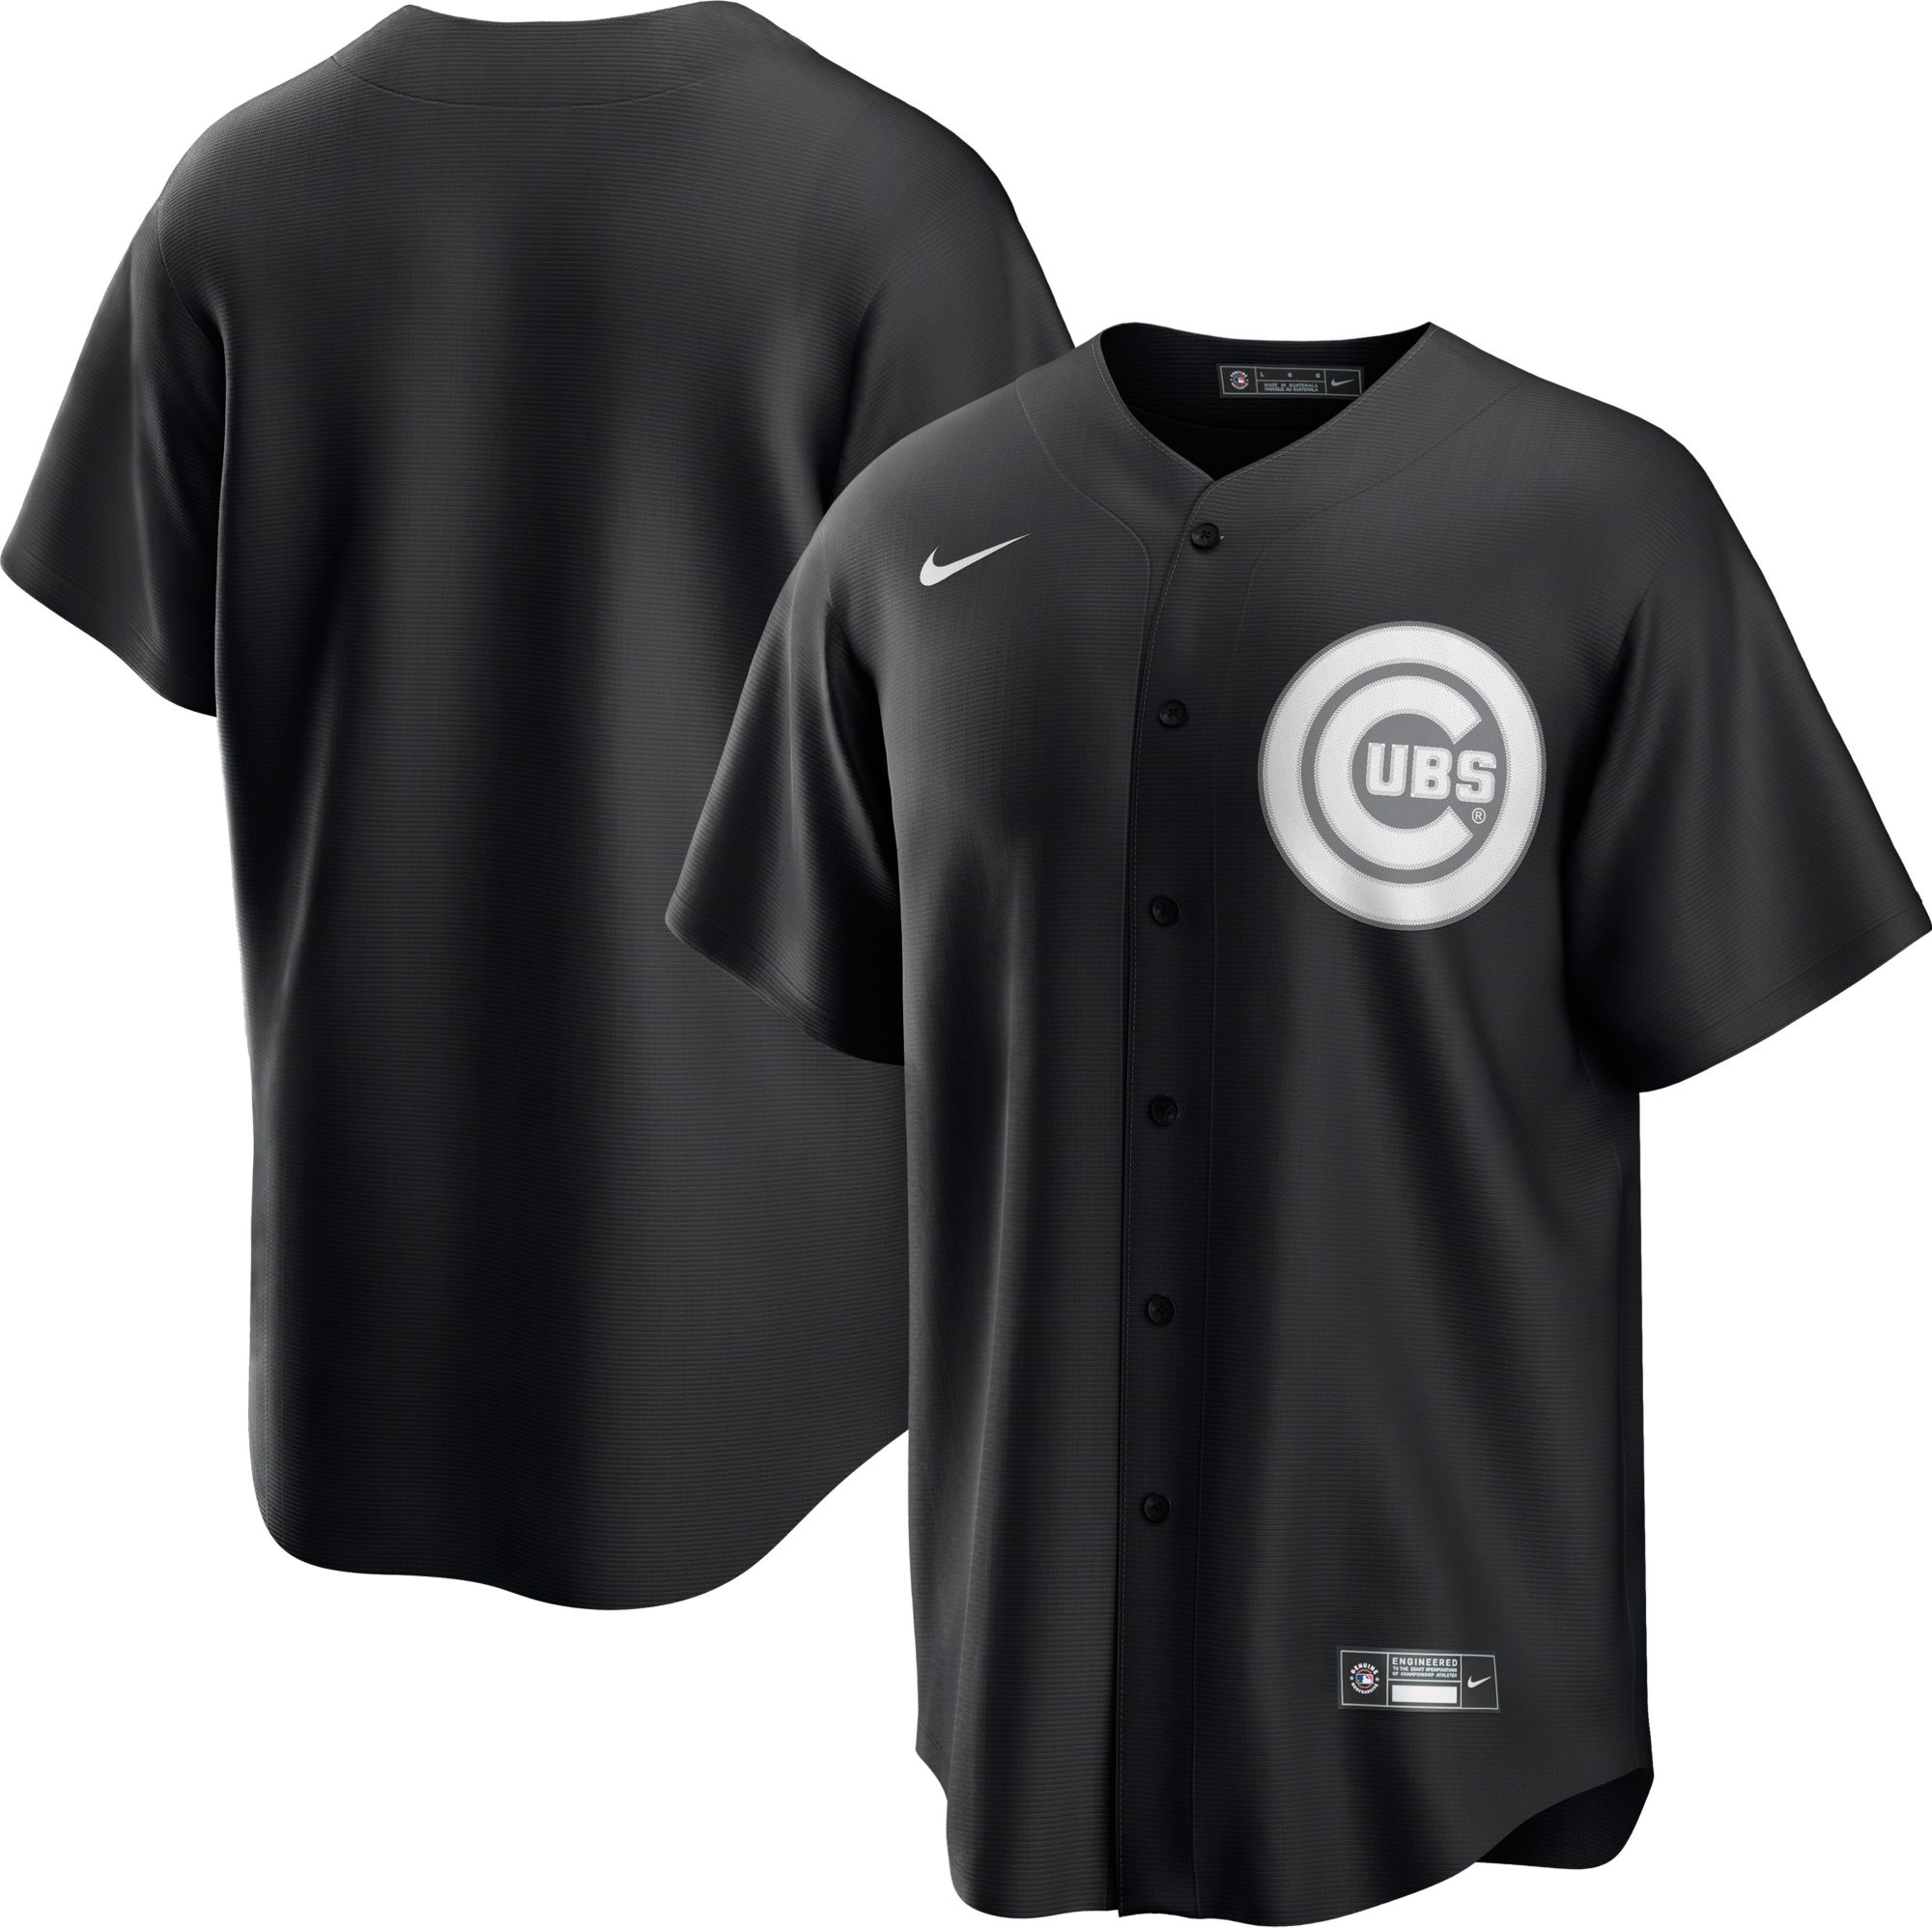 Nike / Men's Chicago Cubs Black Cool Base Jersey